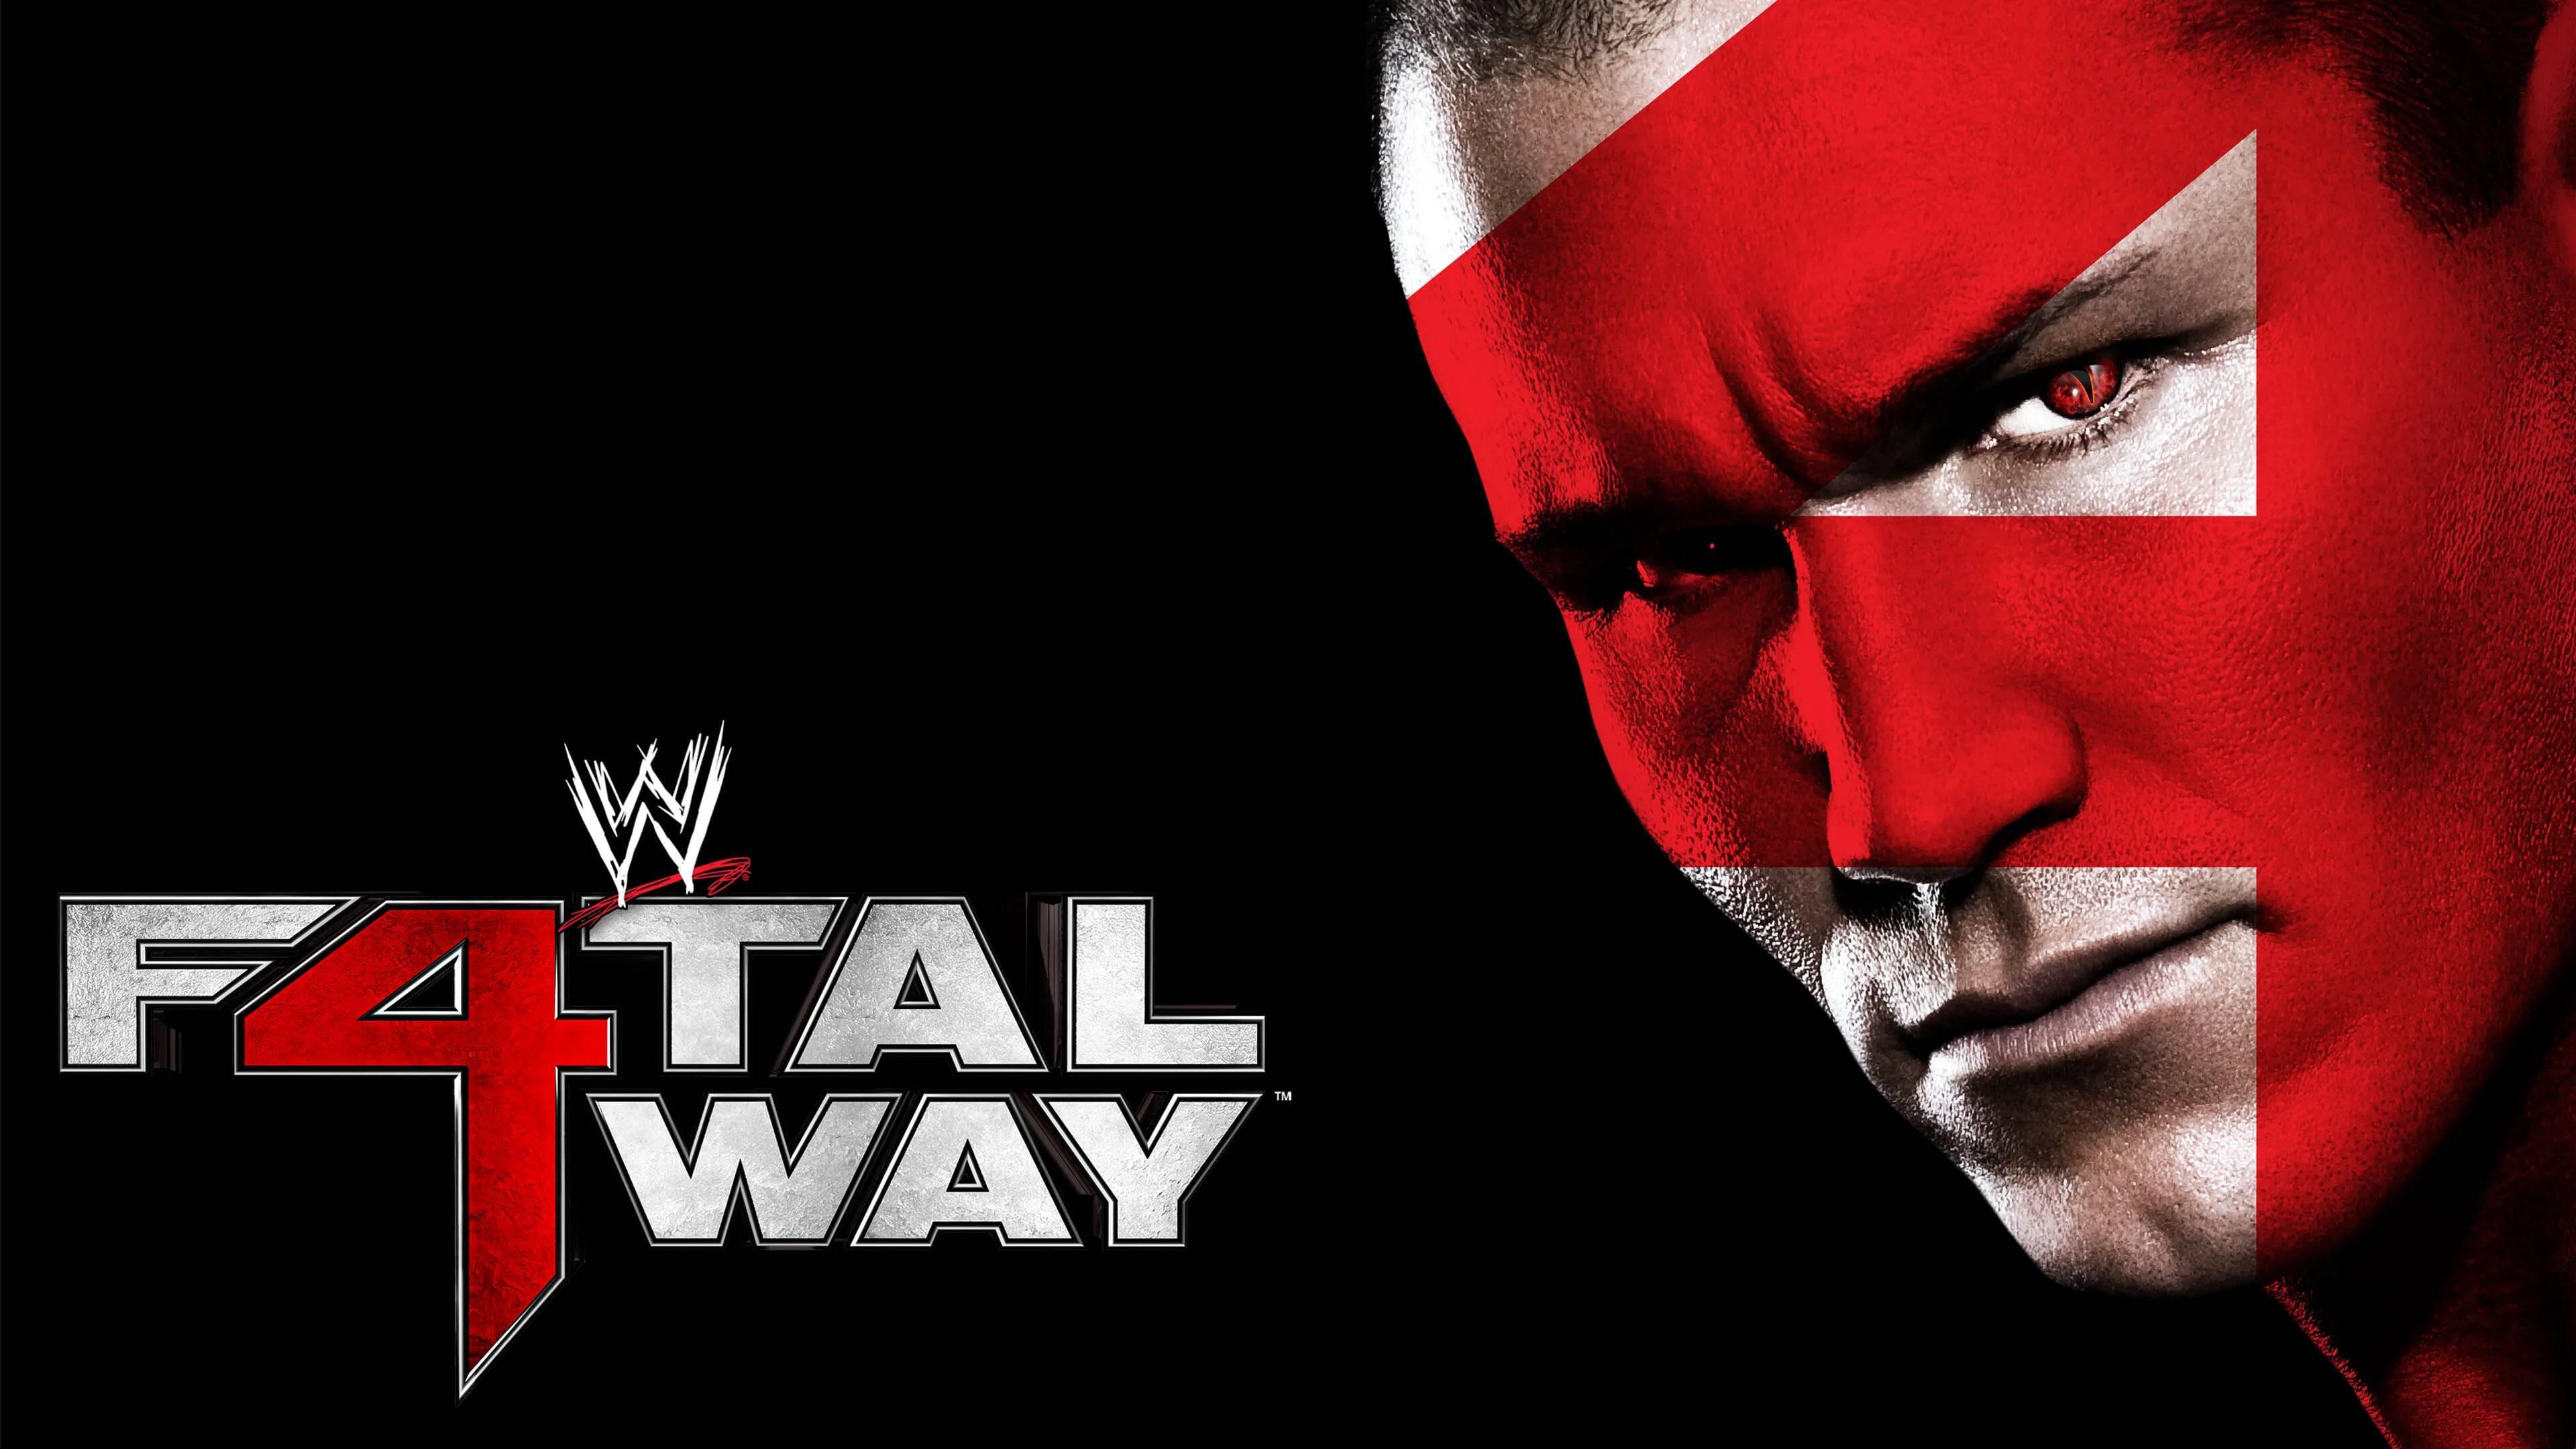 WWE Fatal 4-Way 2010 backdrop